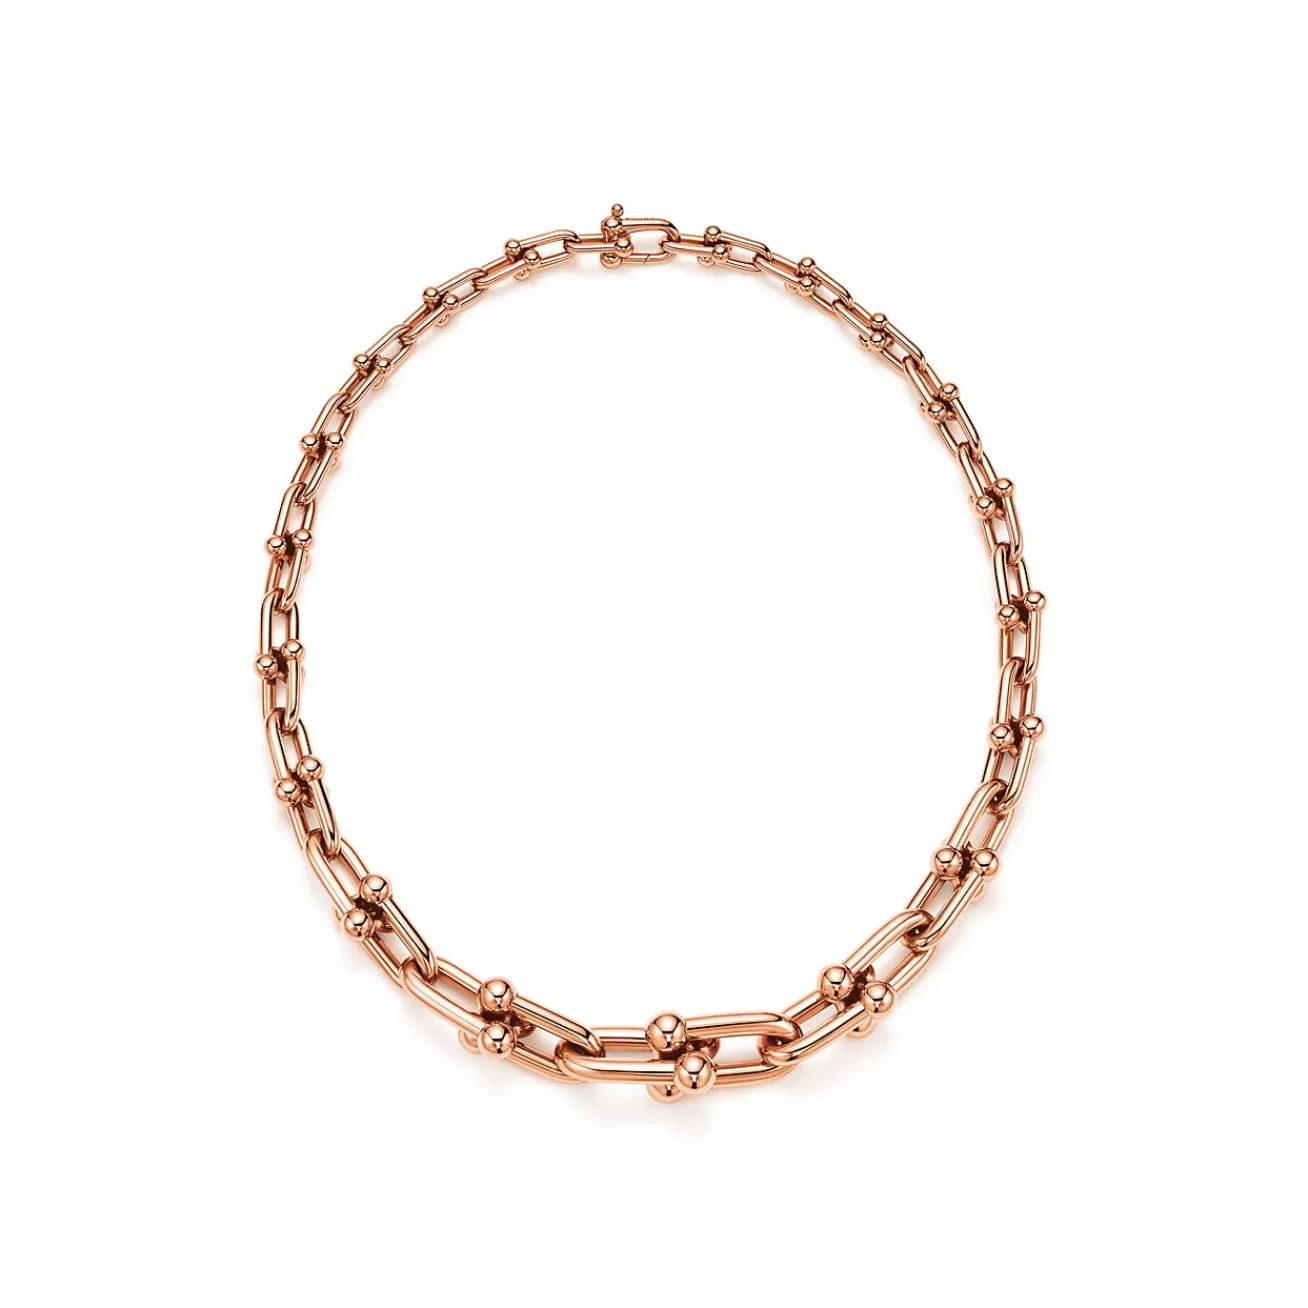 Tiffany & Co. Tiffany HardWear graduated link necklace in 18k rose gold. | ^ Necklaces & Pendants | Men's Jewelry